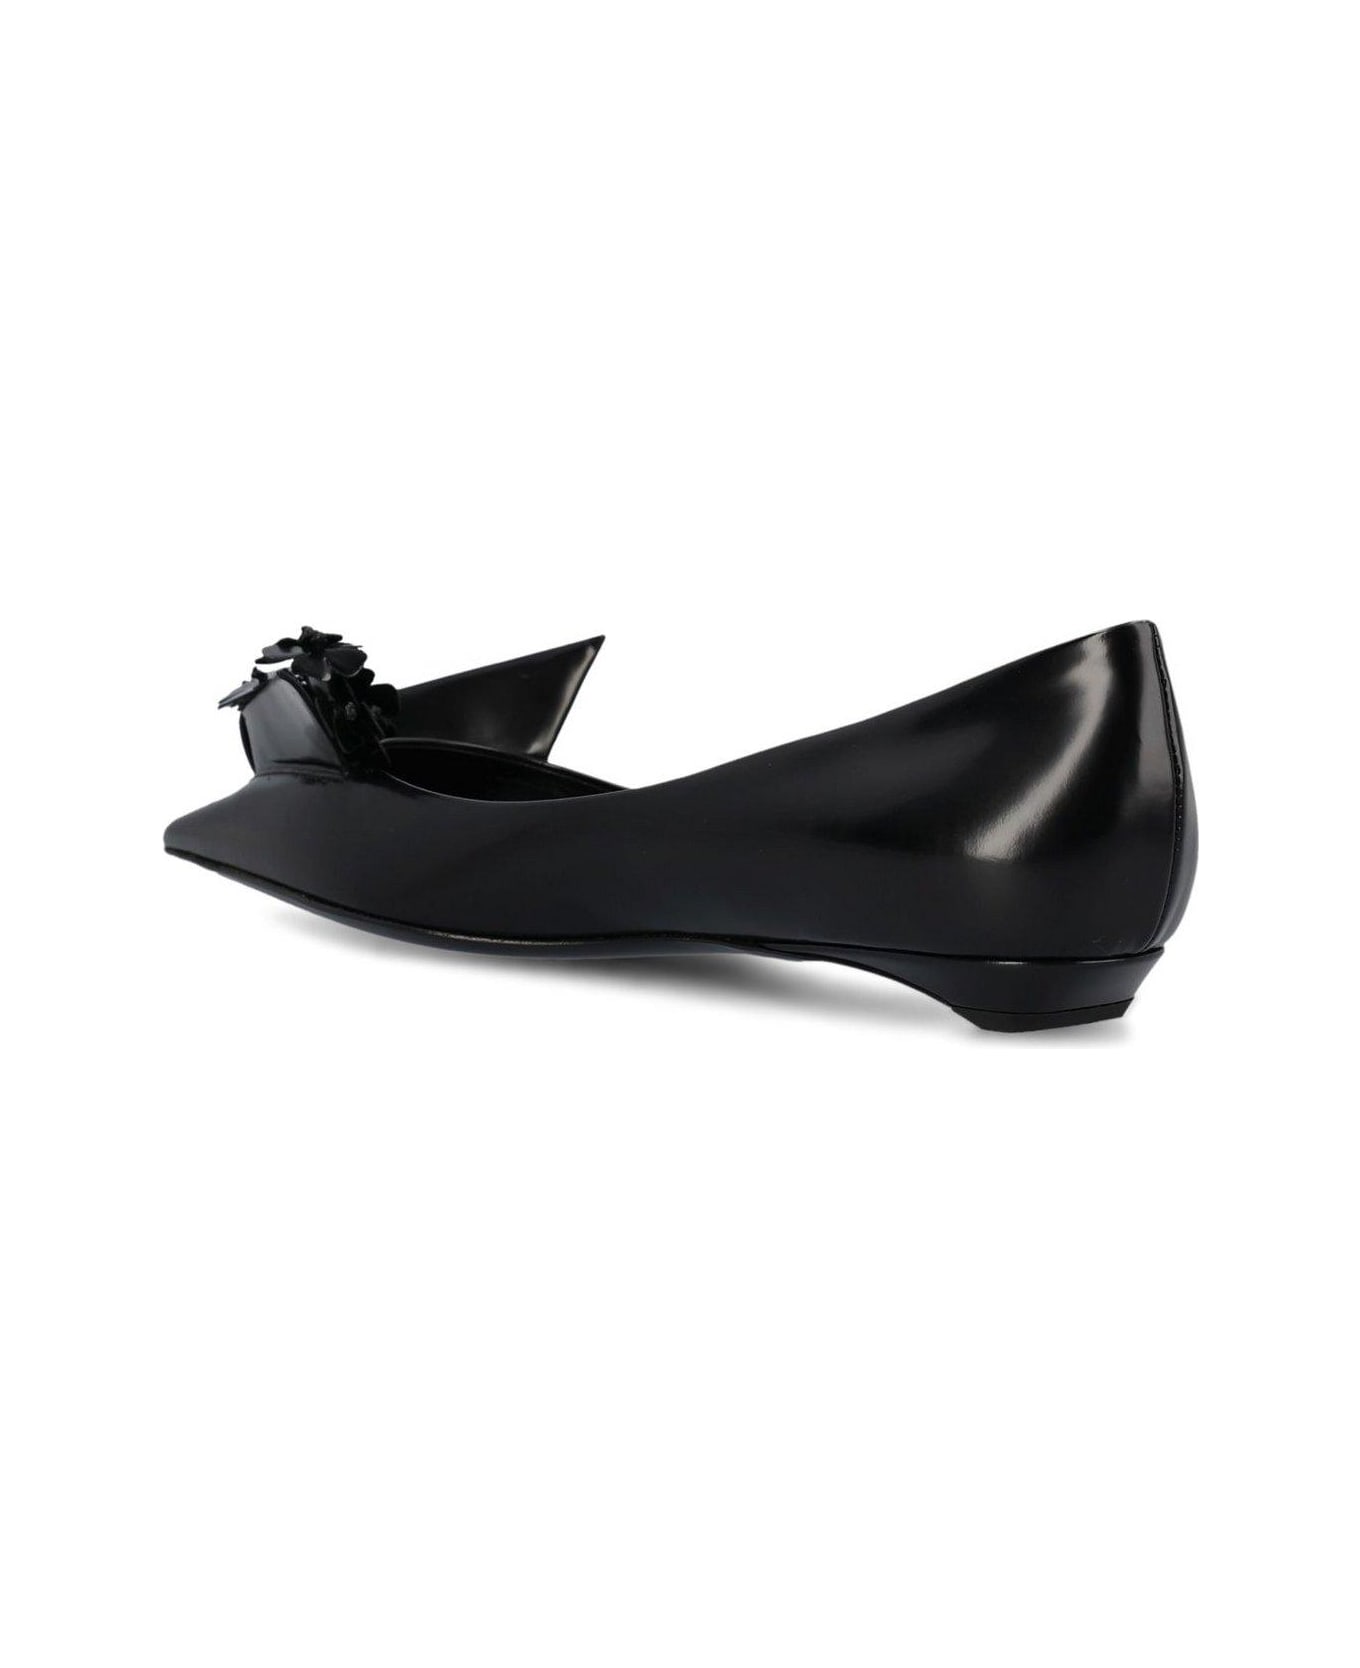 Prada Pointed-toe Flat Shoes - Nero